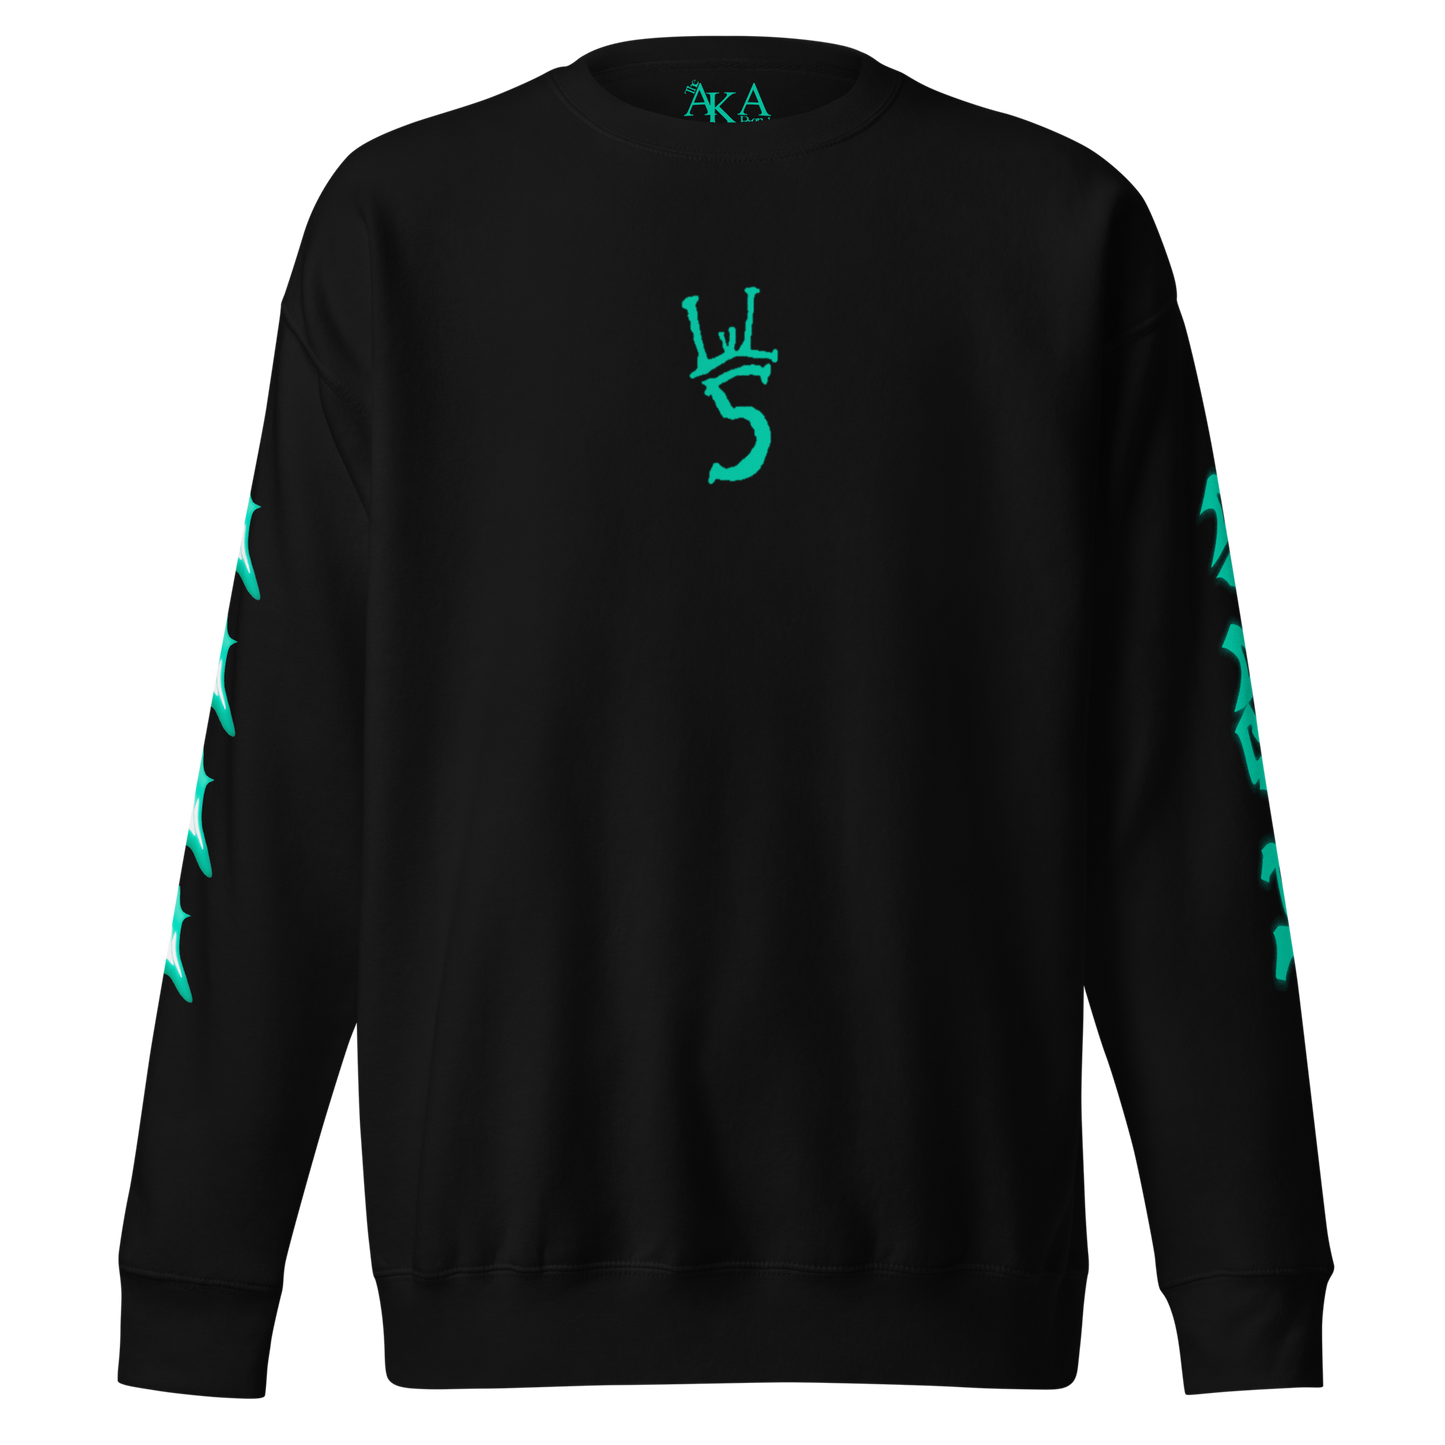 LVL 5 Sweatshirt